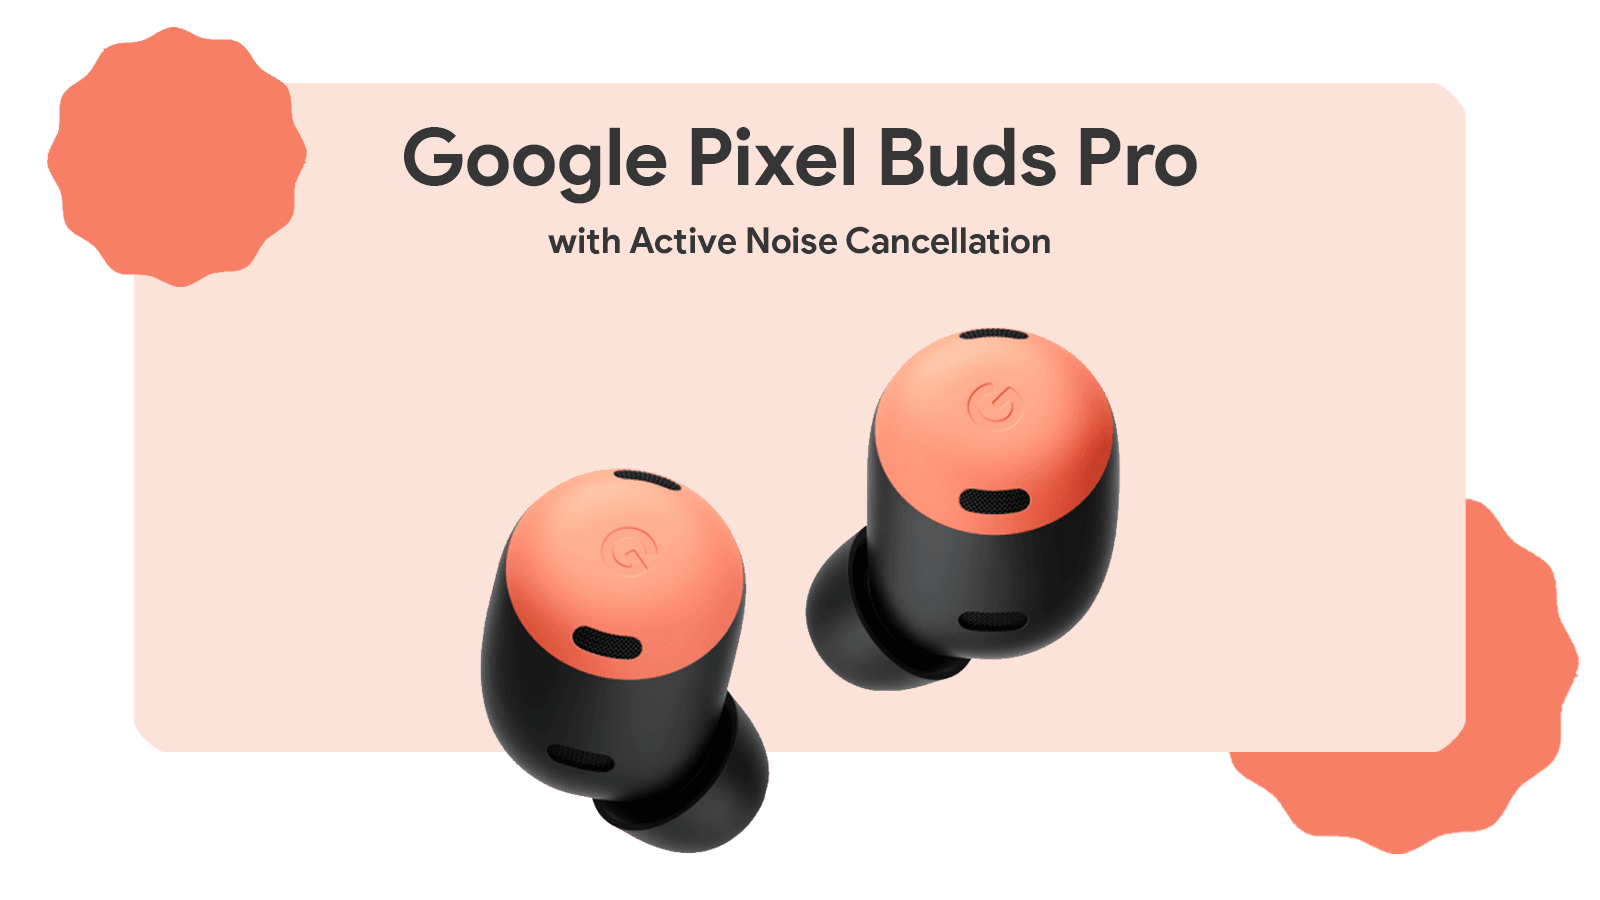 Google Pixel Buds Pro - Mainz Empire Pte Ltd